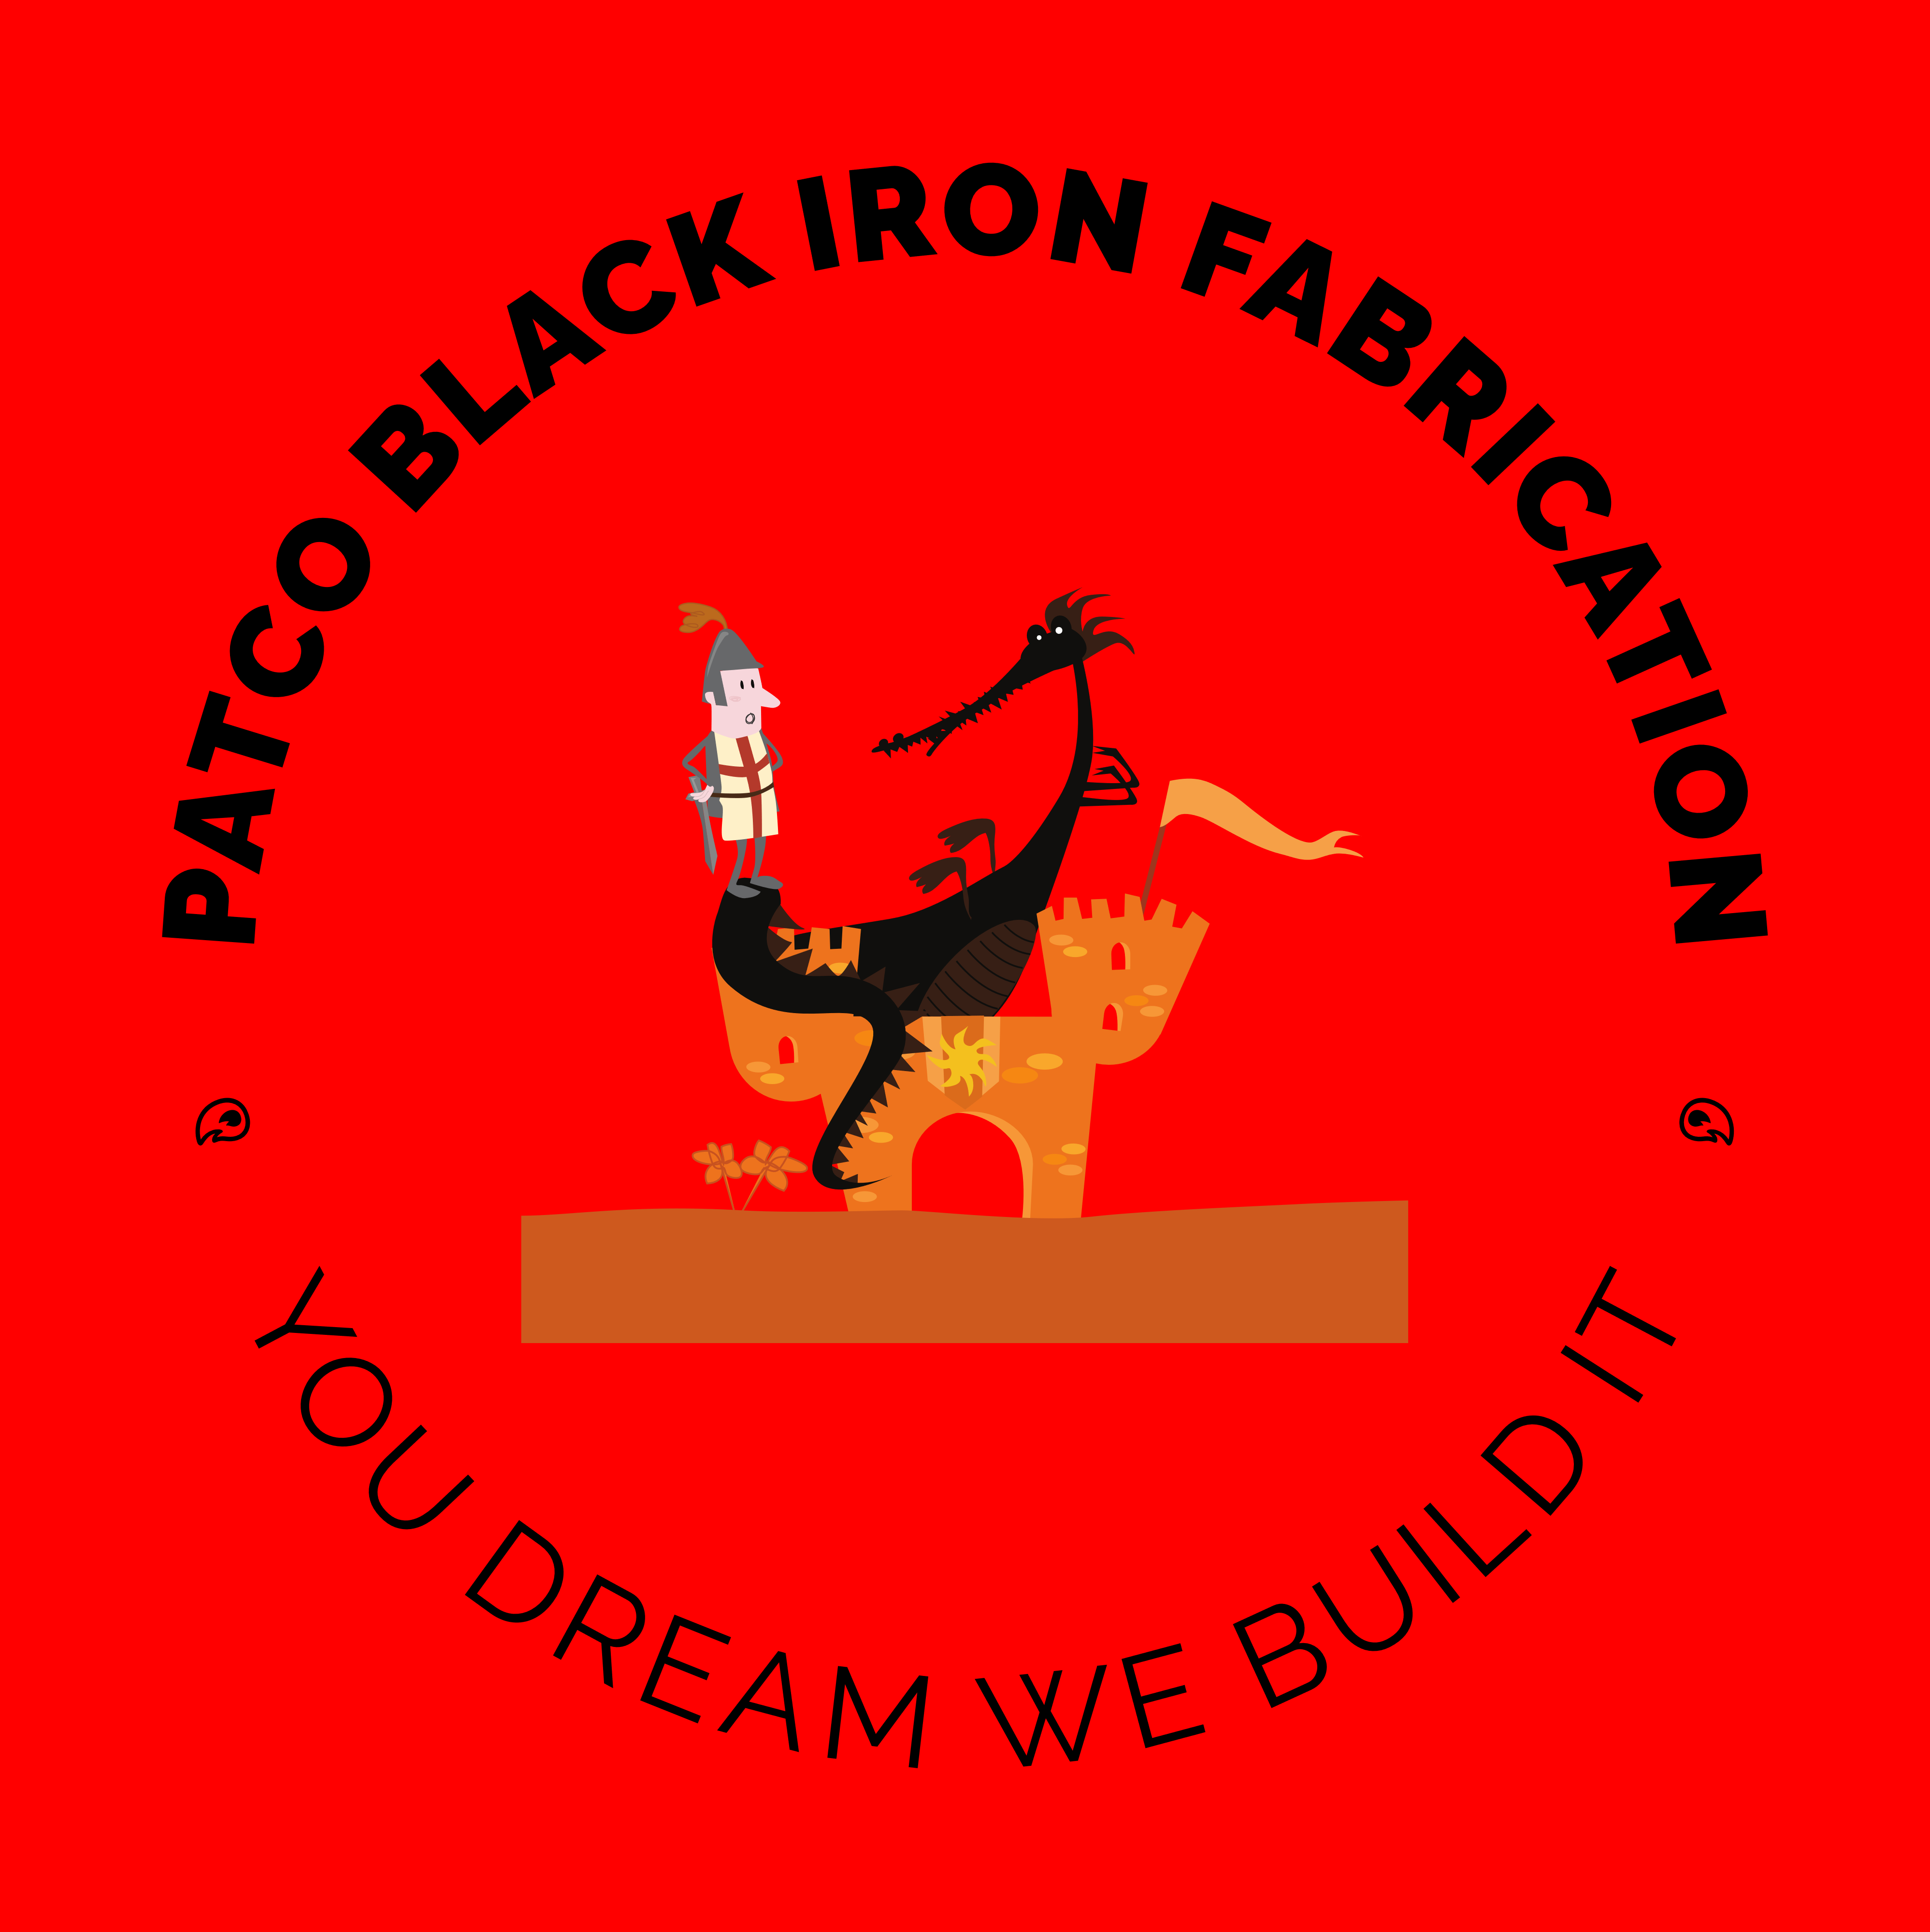 Patco Black Iron Fabrication Logo